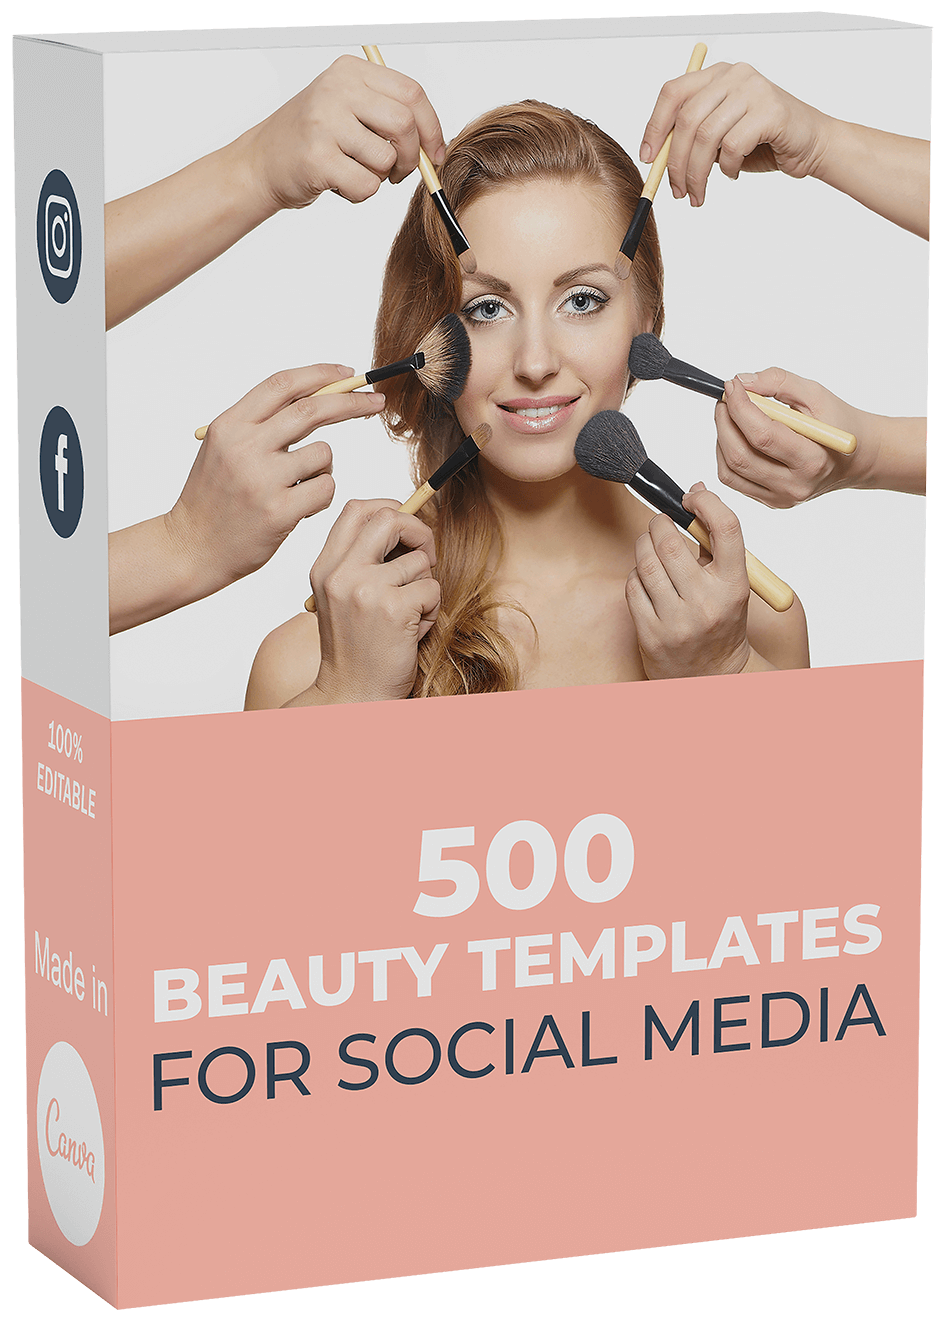 Beauty templates